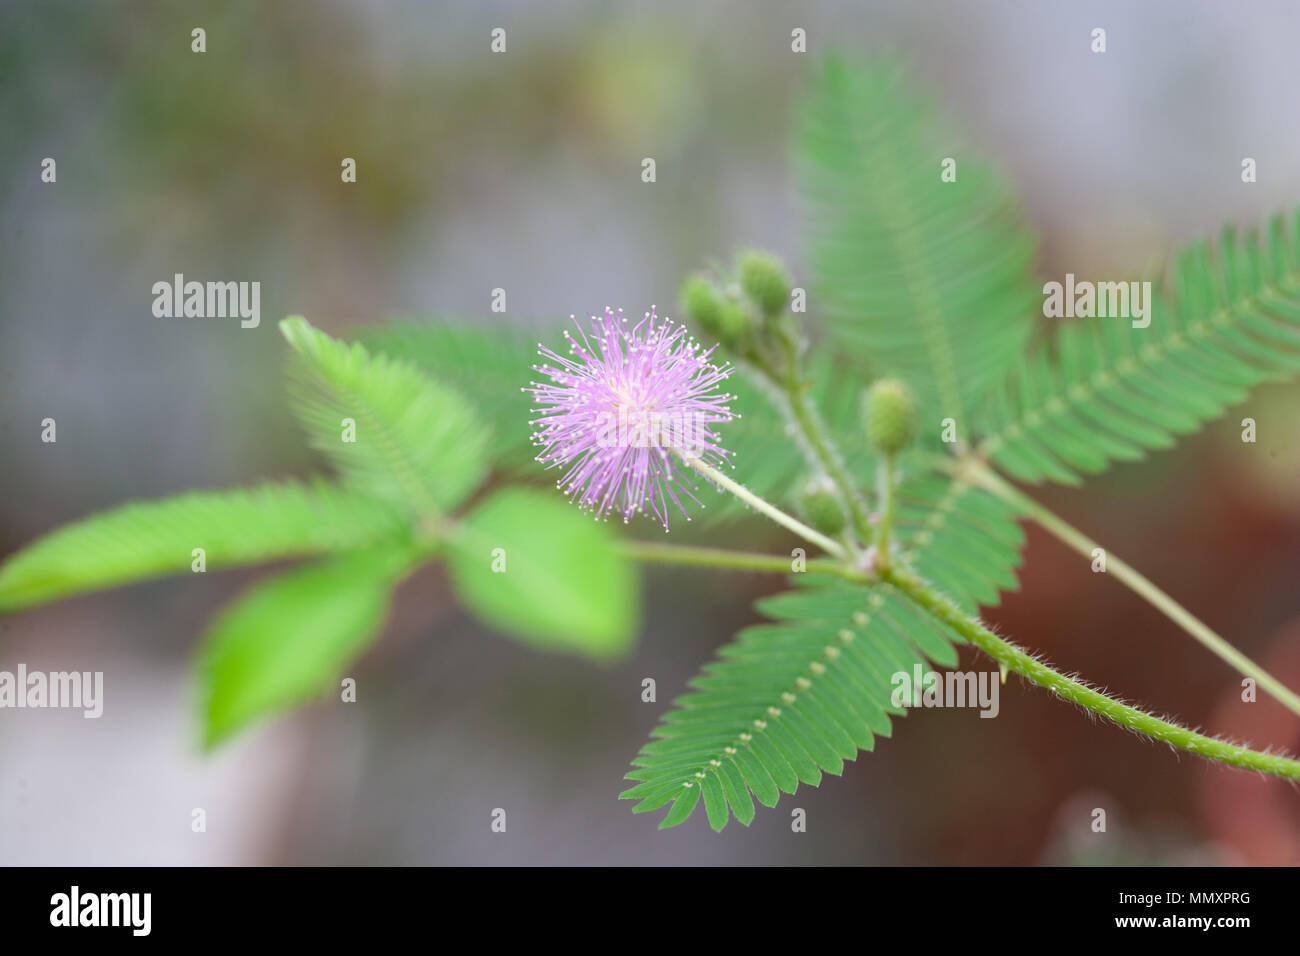 Sensitive Plant, Sensitiva (Mimosa pudica) Stock Photo